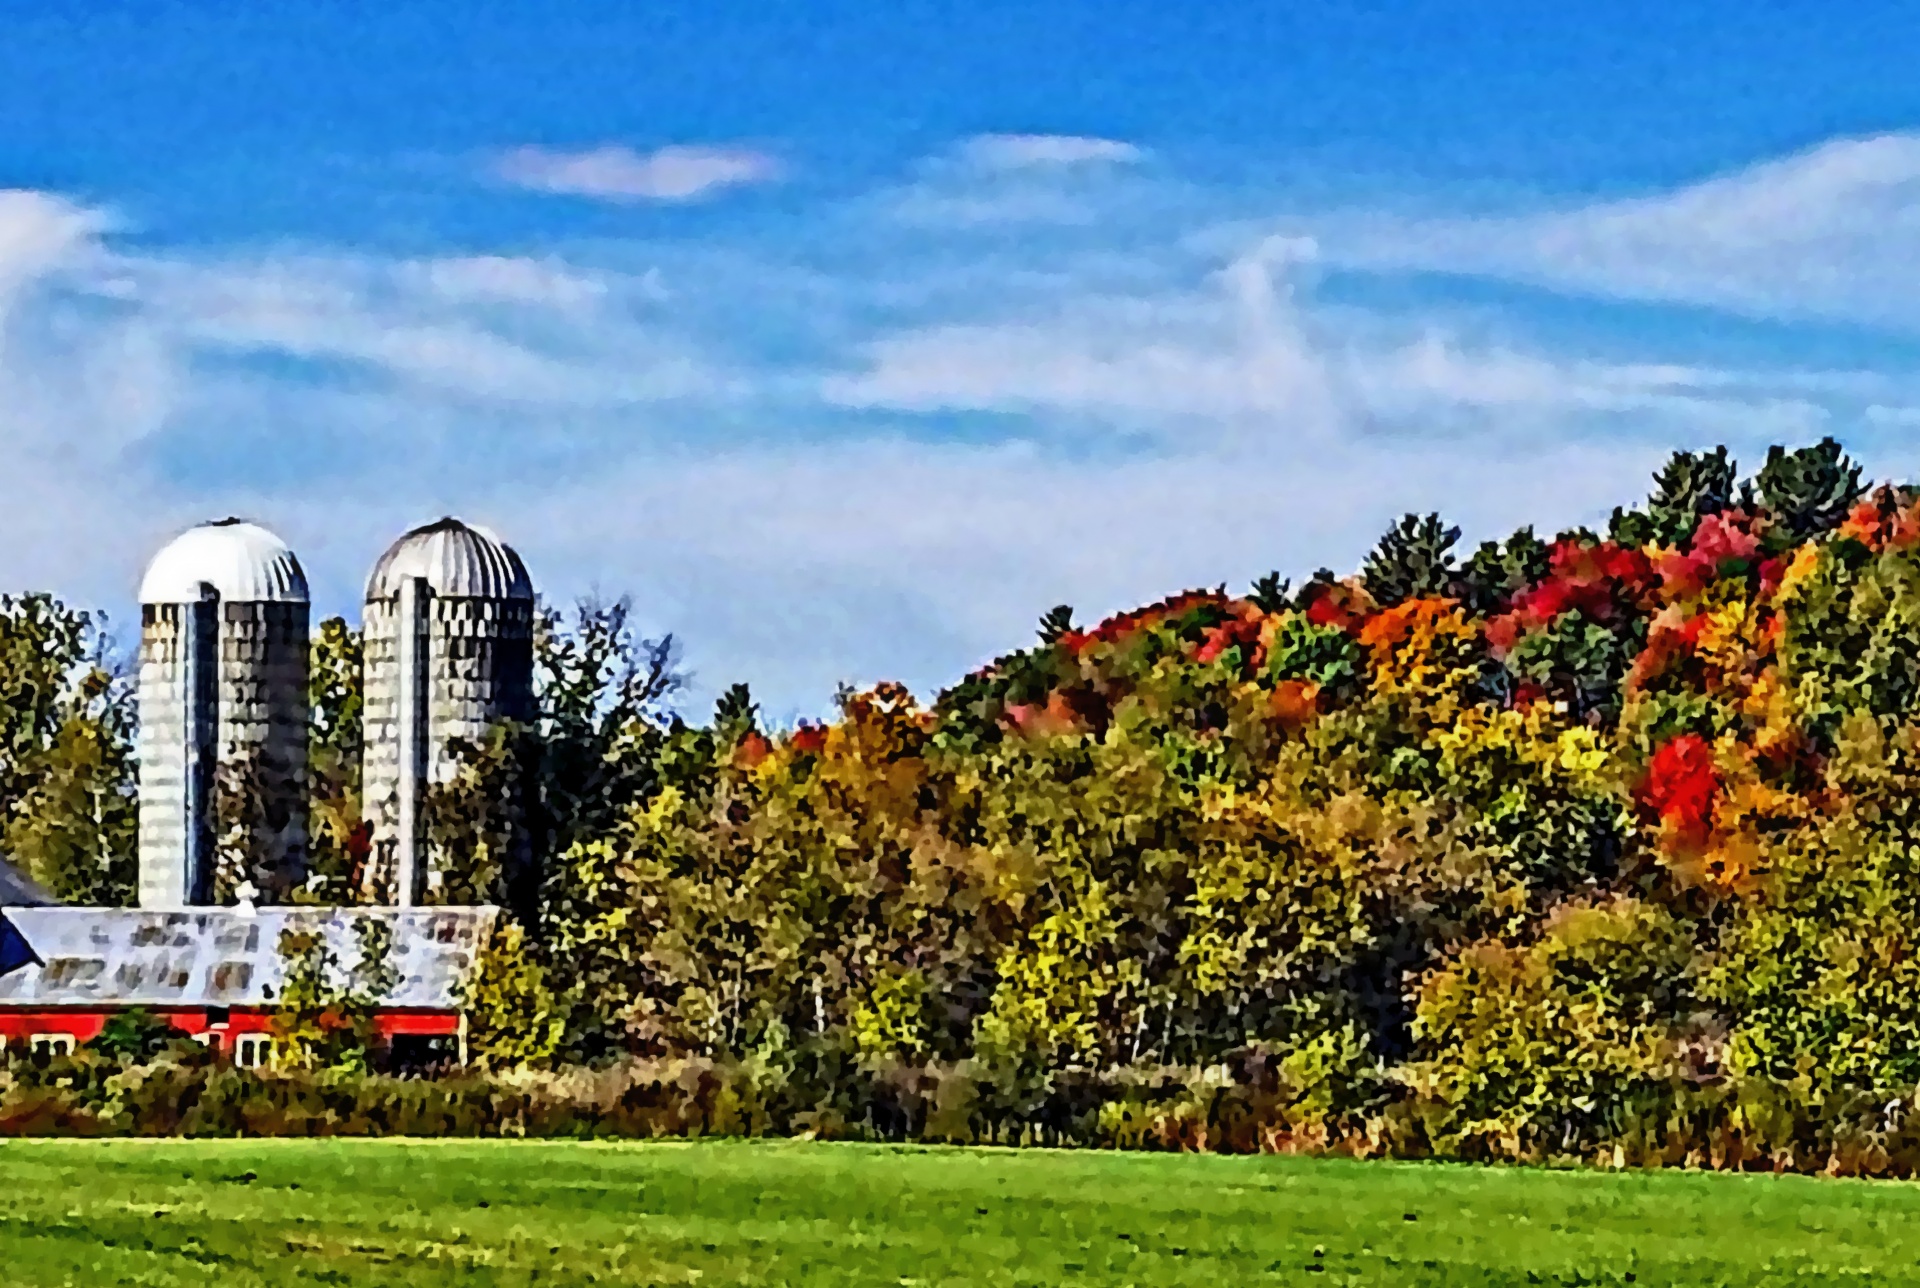 farm silos landscape free photo